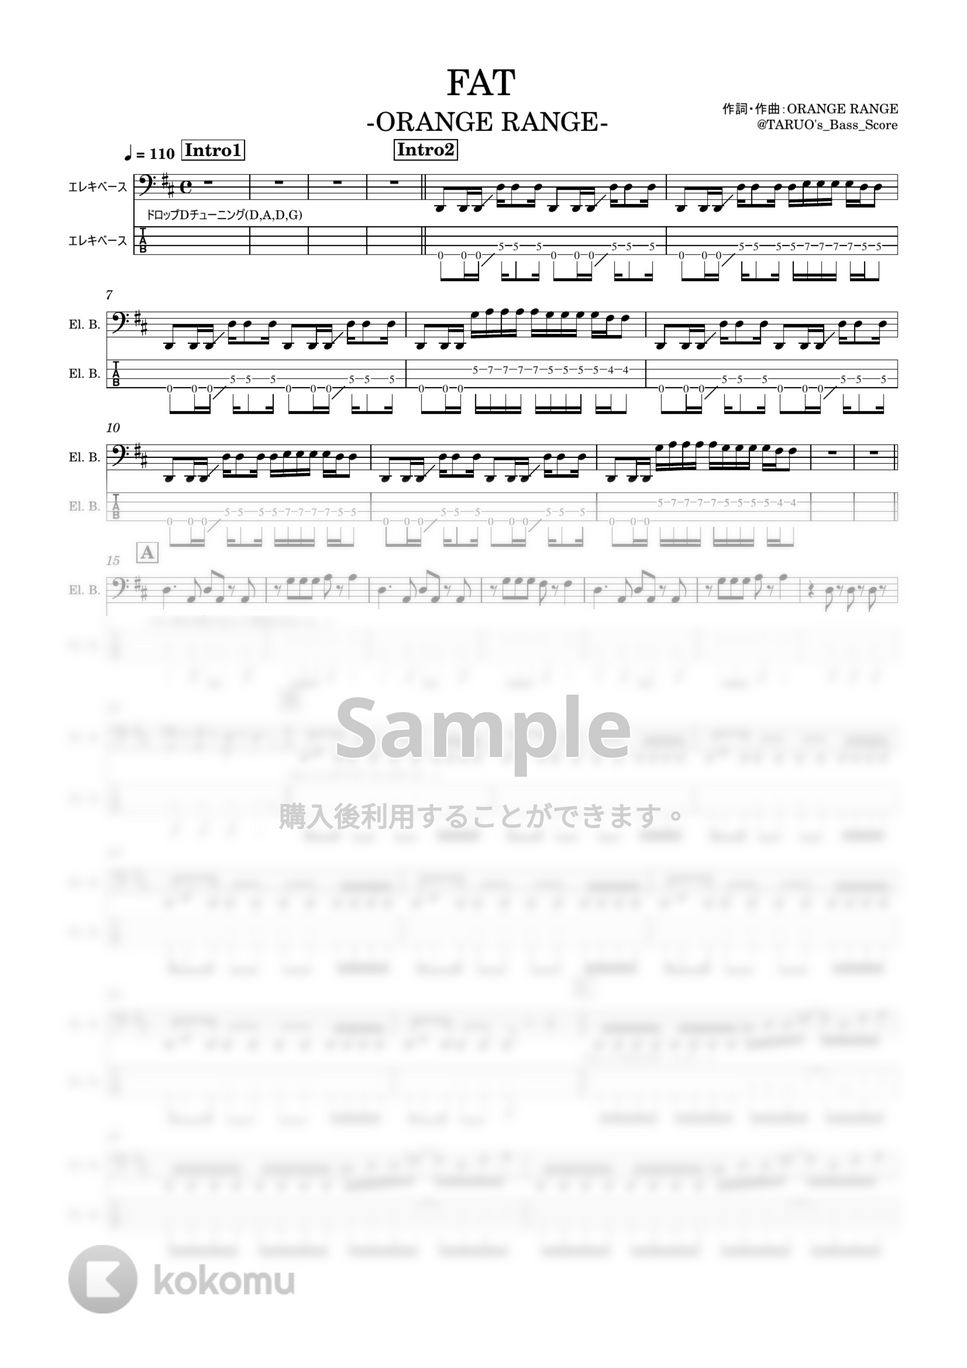 ORANGE RANGE - FAT(4弦DropD) (ベース/TAB/ORANGE RANGE) by TARUO's_Bass_Score